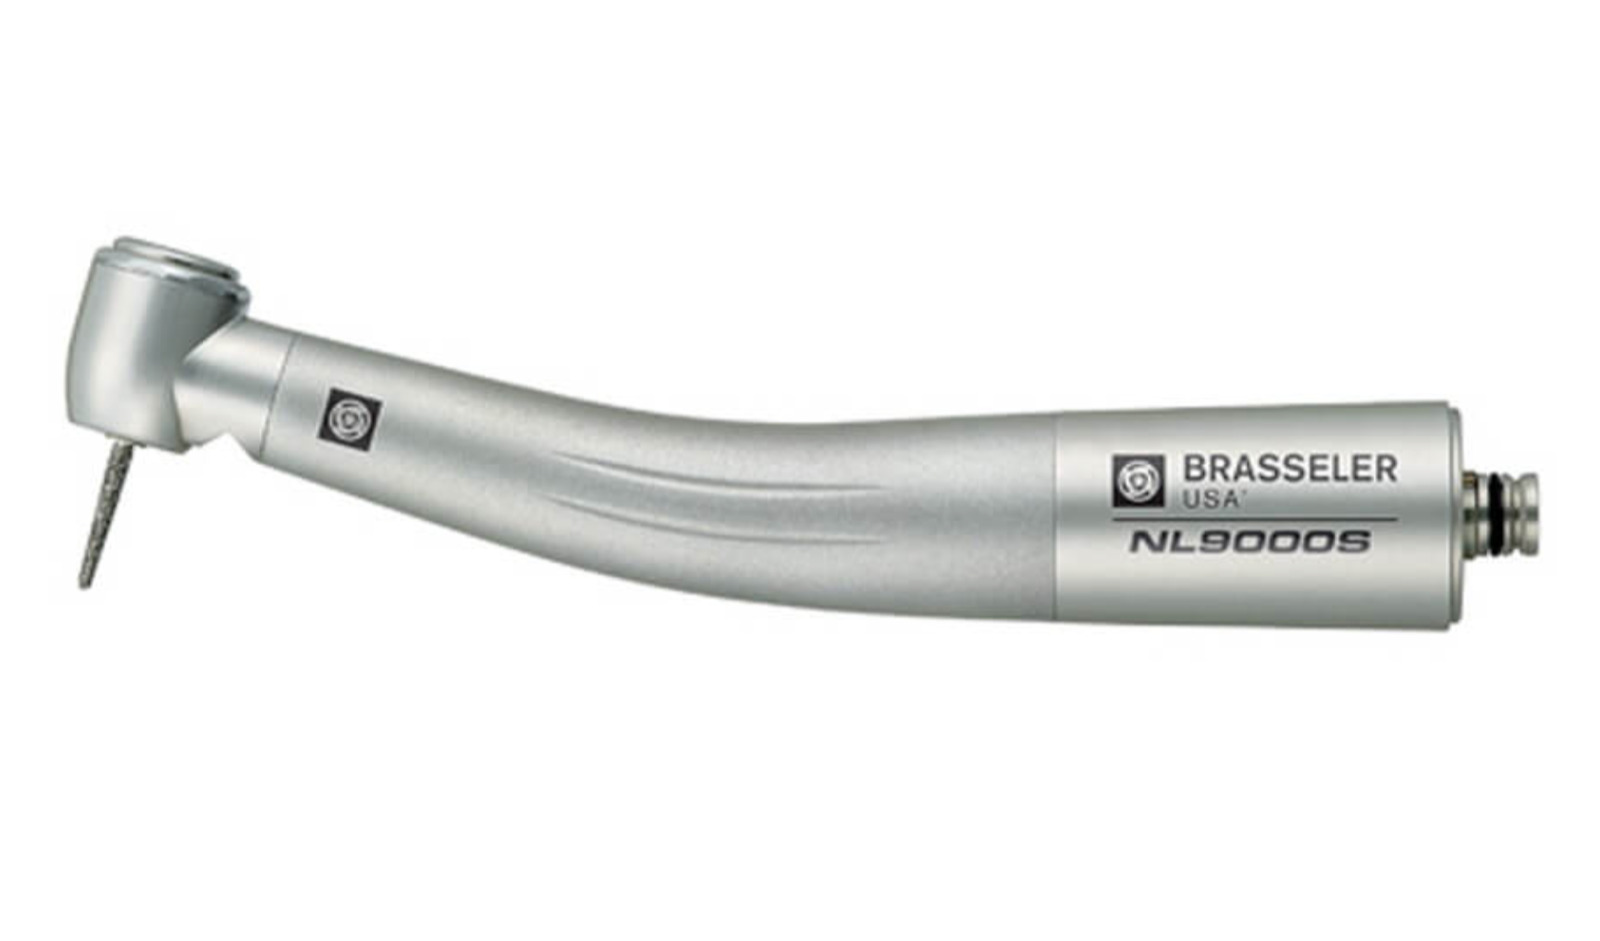 Brasseler NL9000S High Speed Air Handpiece with Standard Head Size